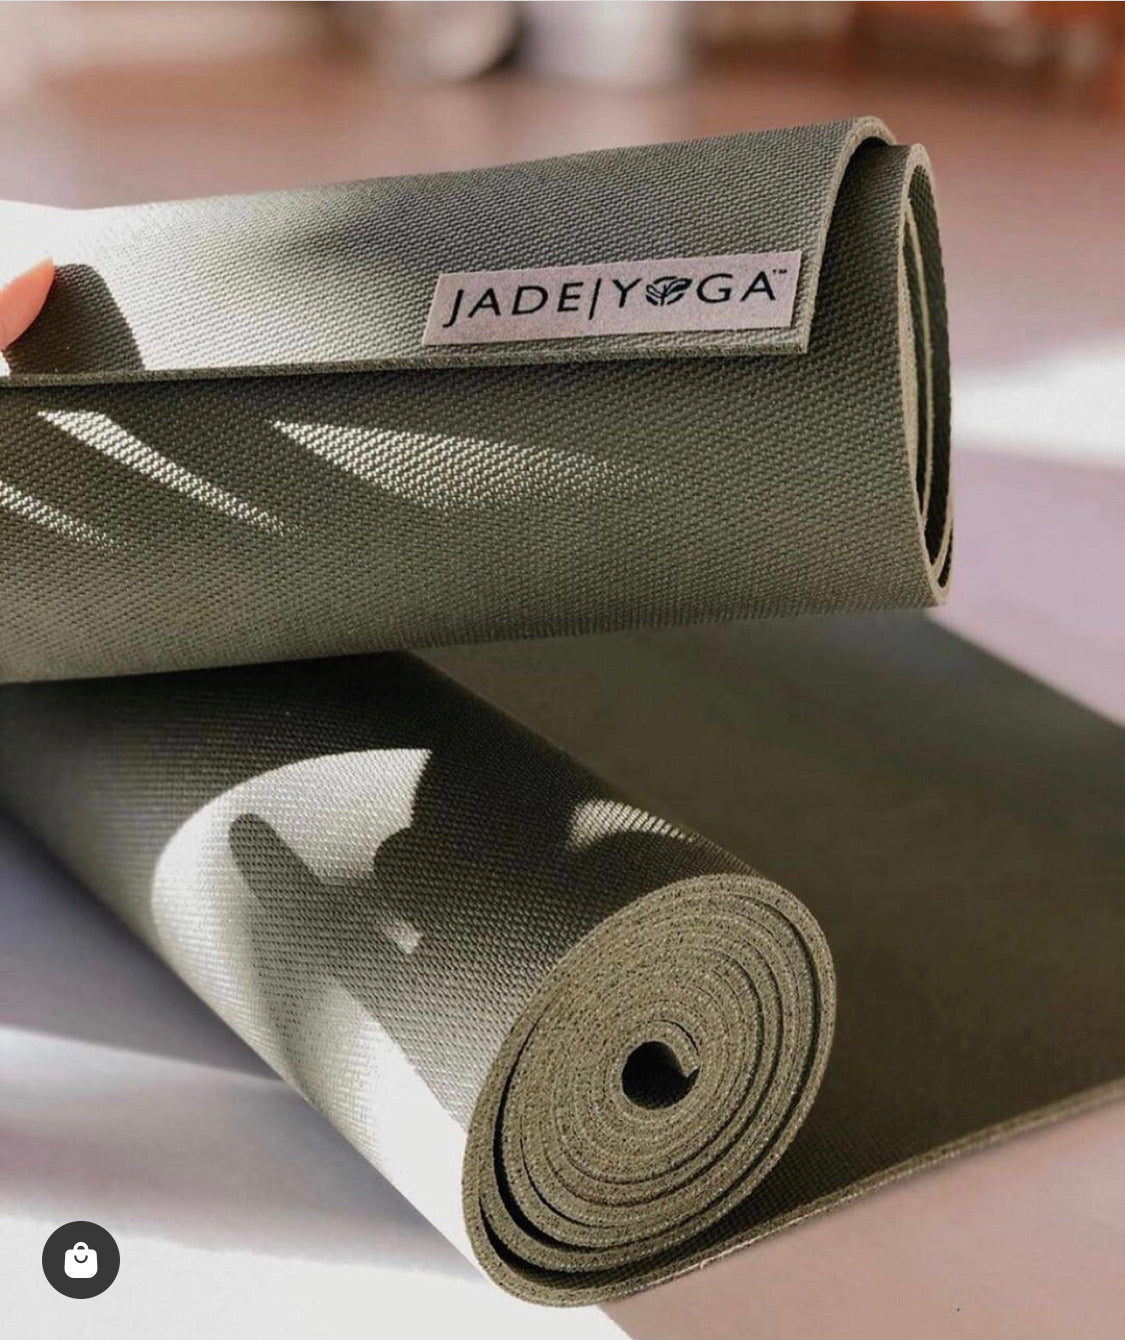 Jade Yoga 374OL Harmony Mat, Olive Green, 3/16 24 x 74